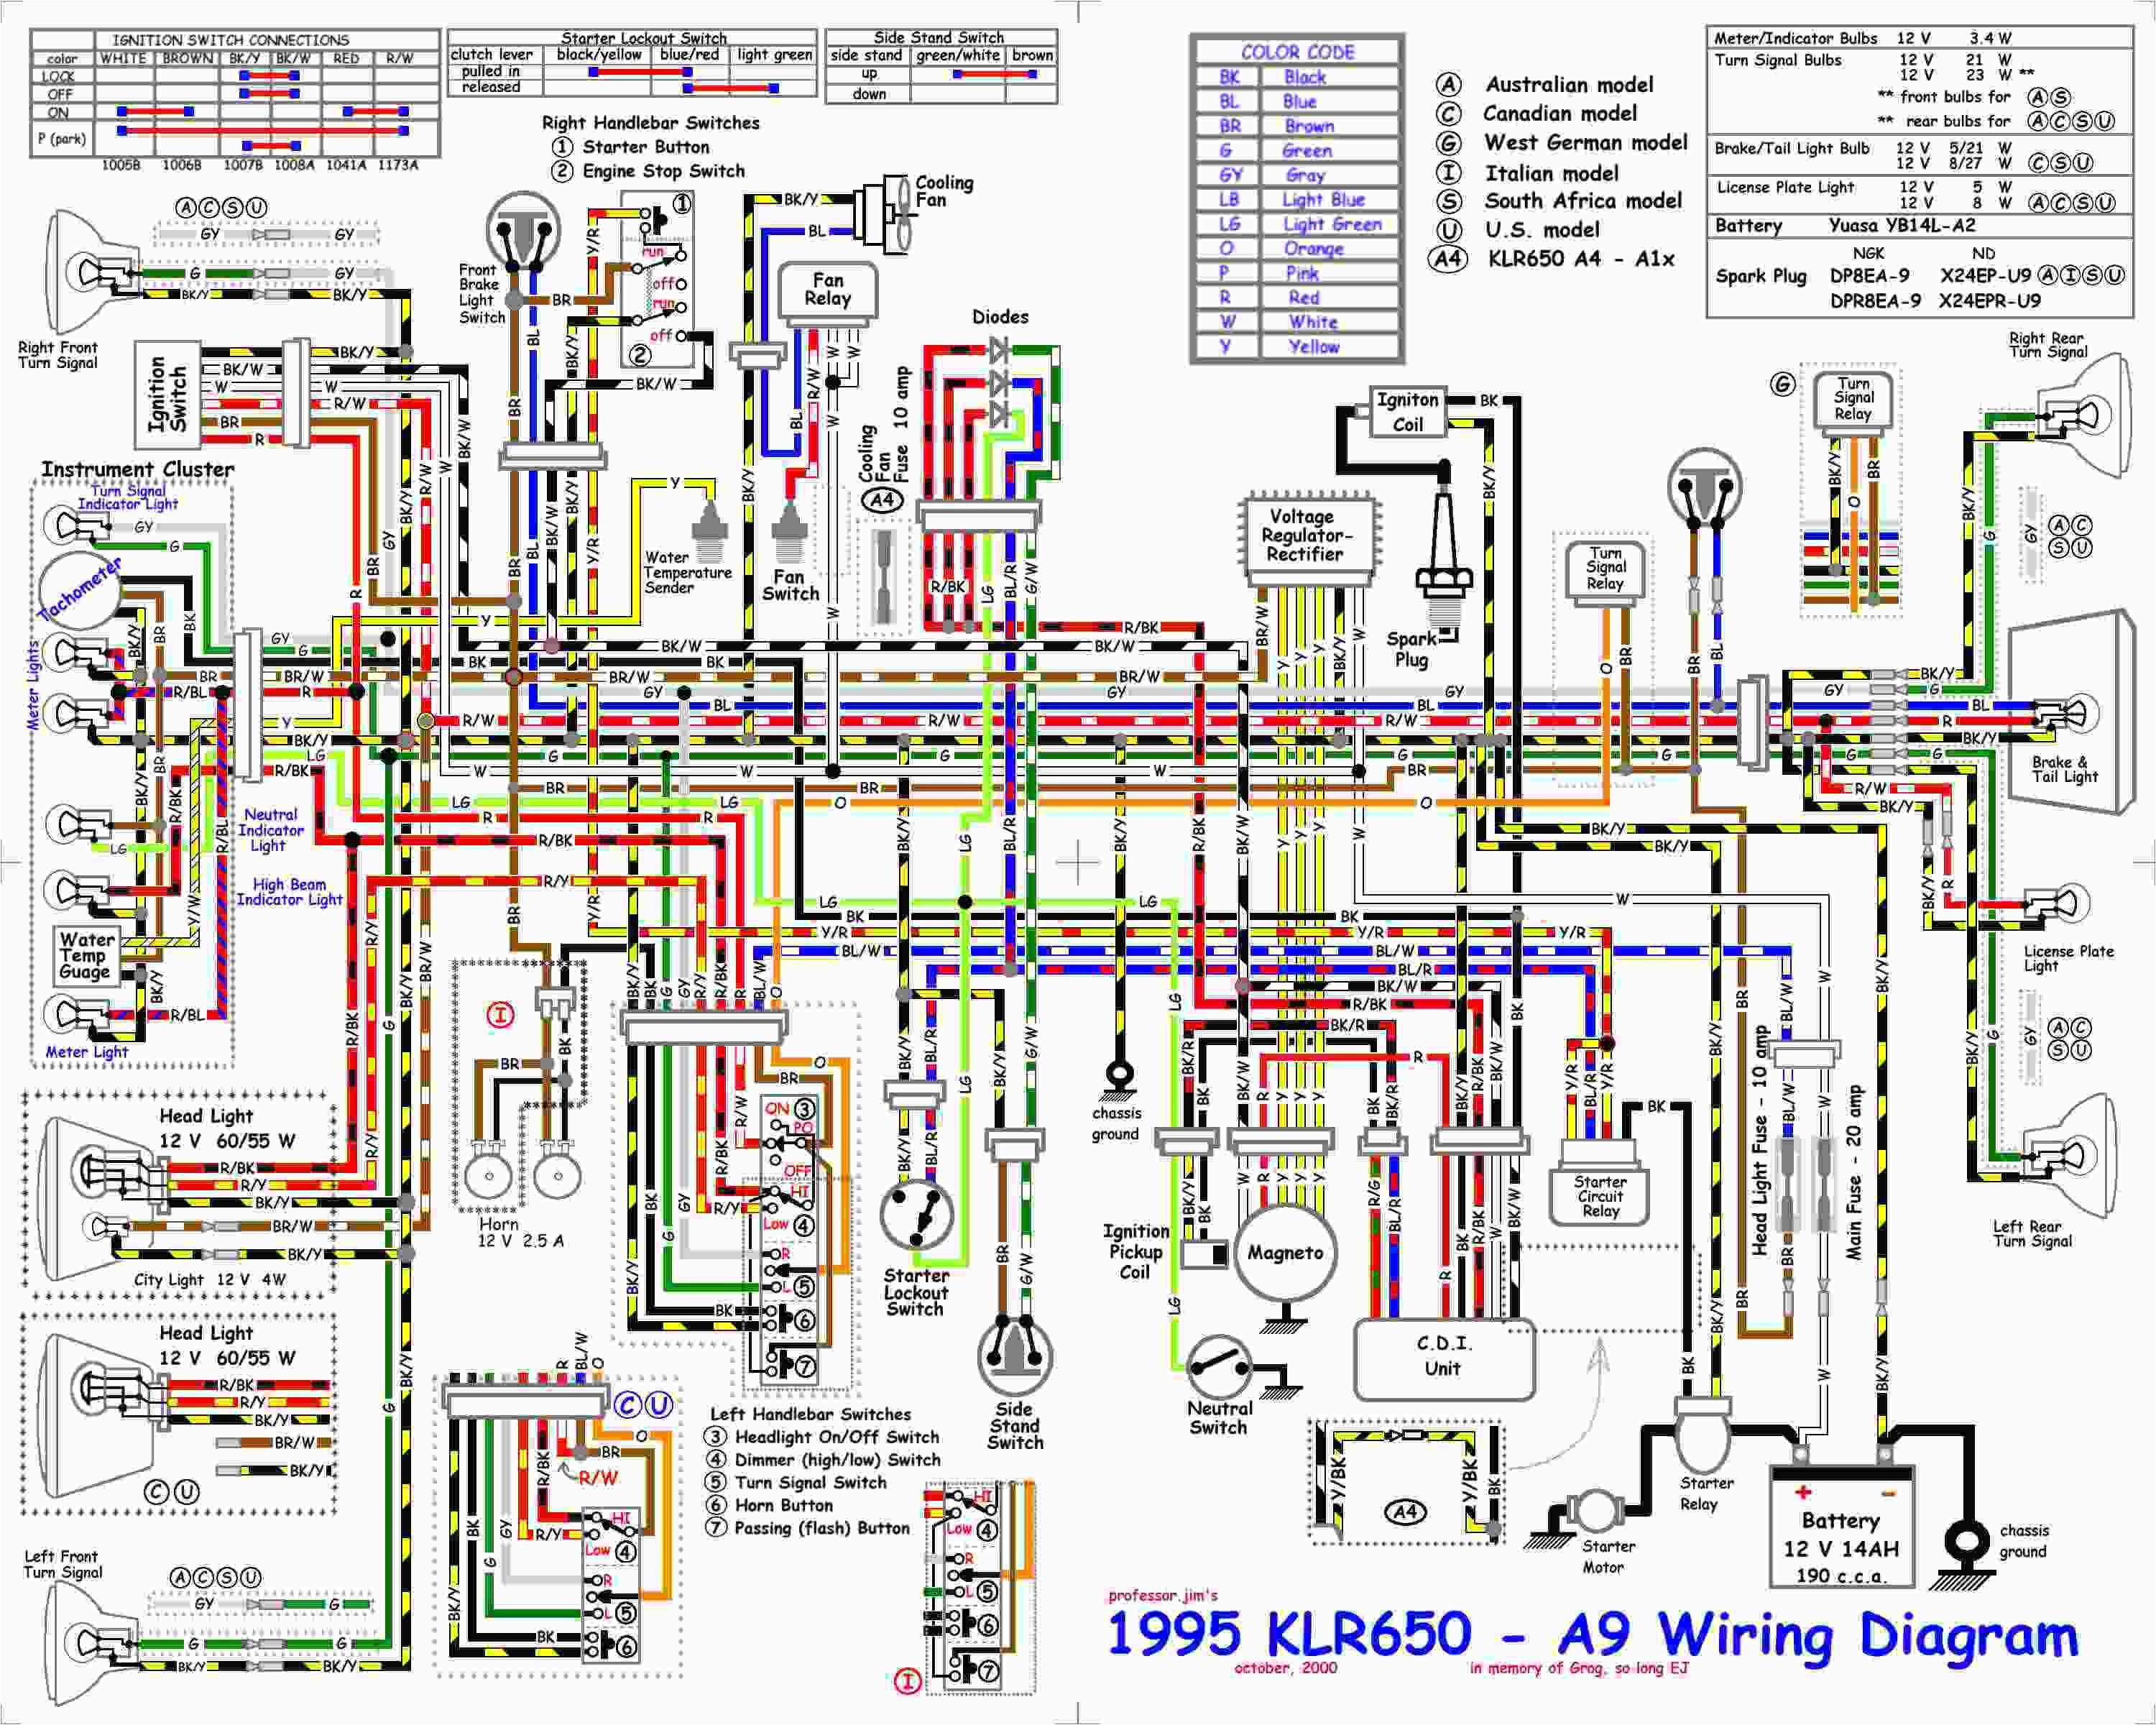 odysy wiring diagram odyssey wiring diagram wiring diagrams instructions for best odyssey fuse box diagram texecom